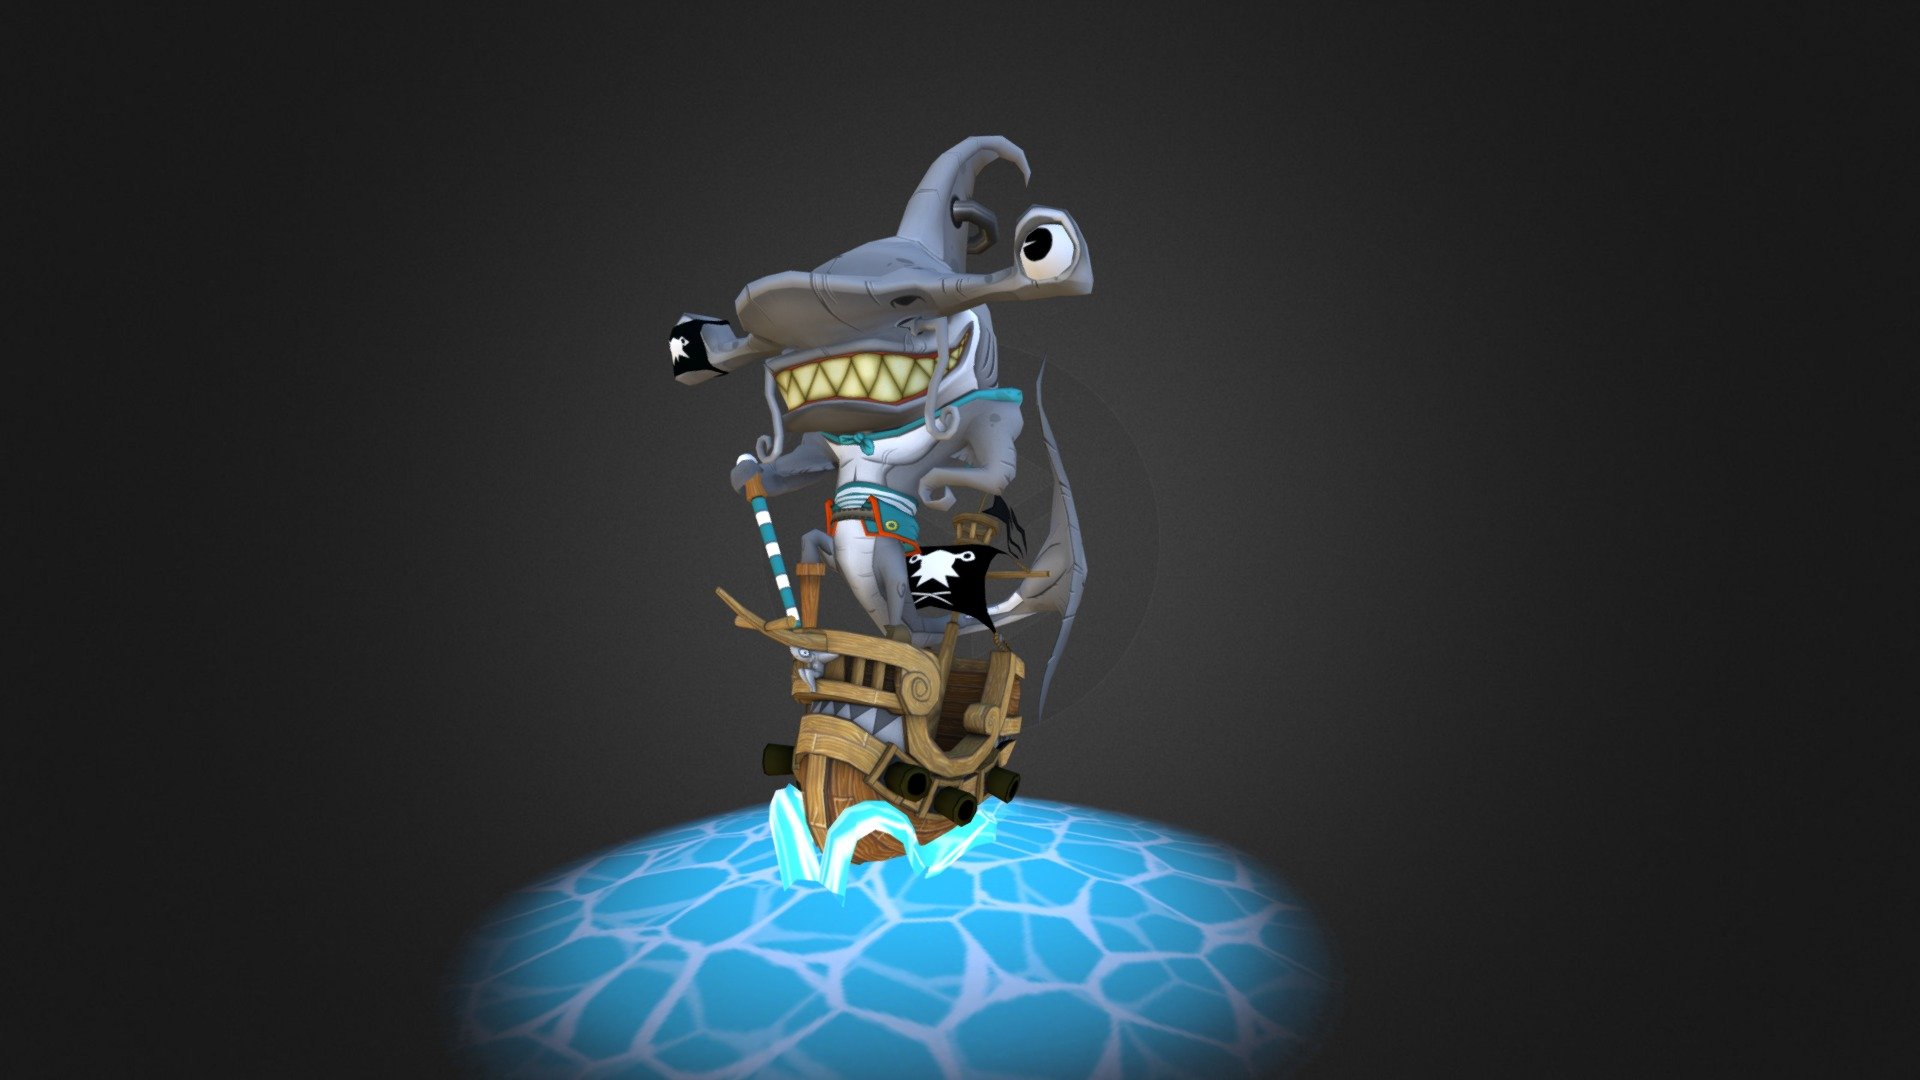 Concept by xa-xa-xa
http://xa-xa-xa.deviantart.com/art/Pirate-Squale-137247491

http://jamesmarshall3d.com - Shark Pirate - 3D model by JimmyMarshall 3d model